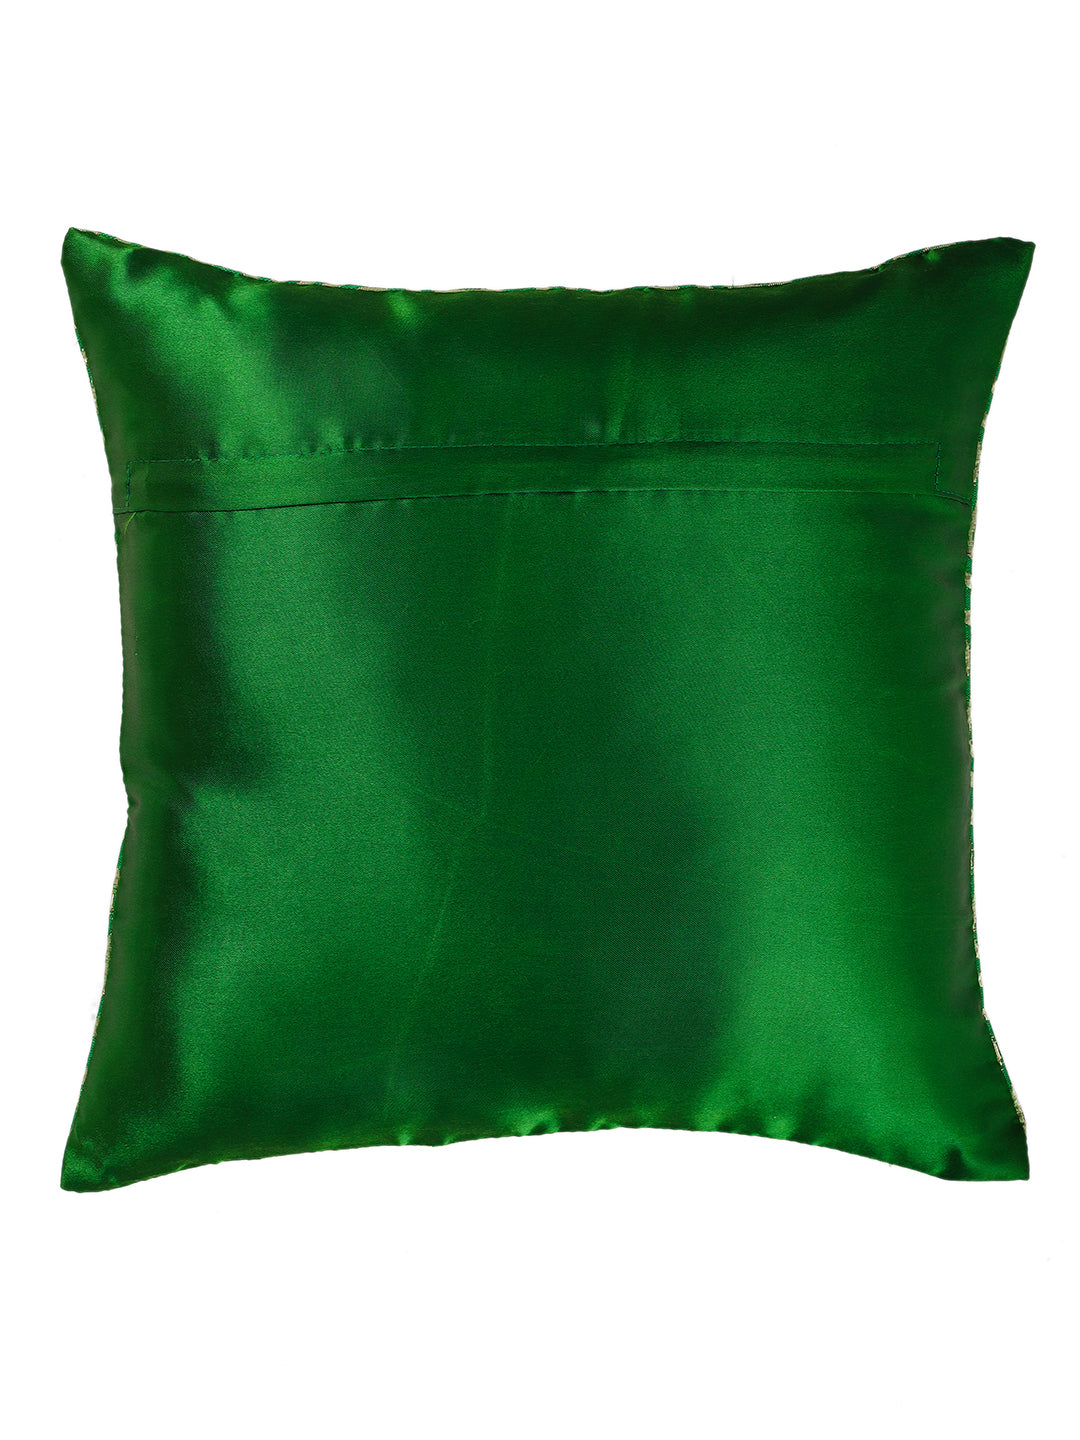 Silkfab Set 0f 5 Decorative Silk Cushion Covers (16x16) Flame Green - SILKFAB